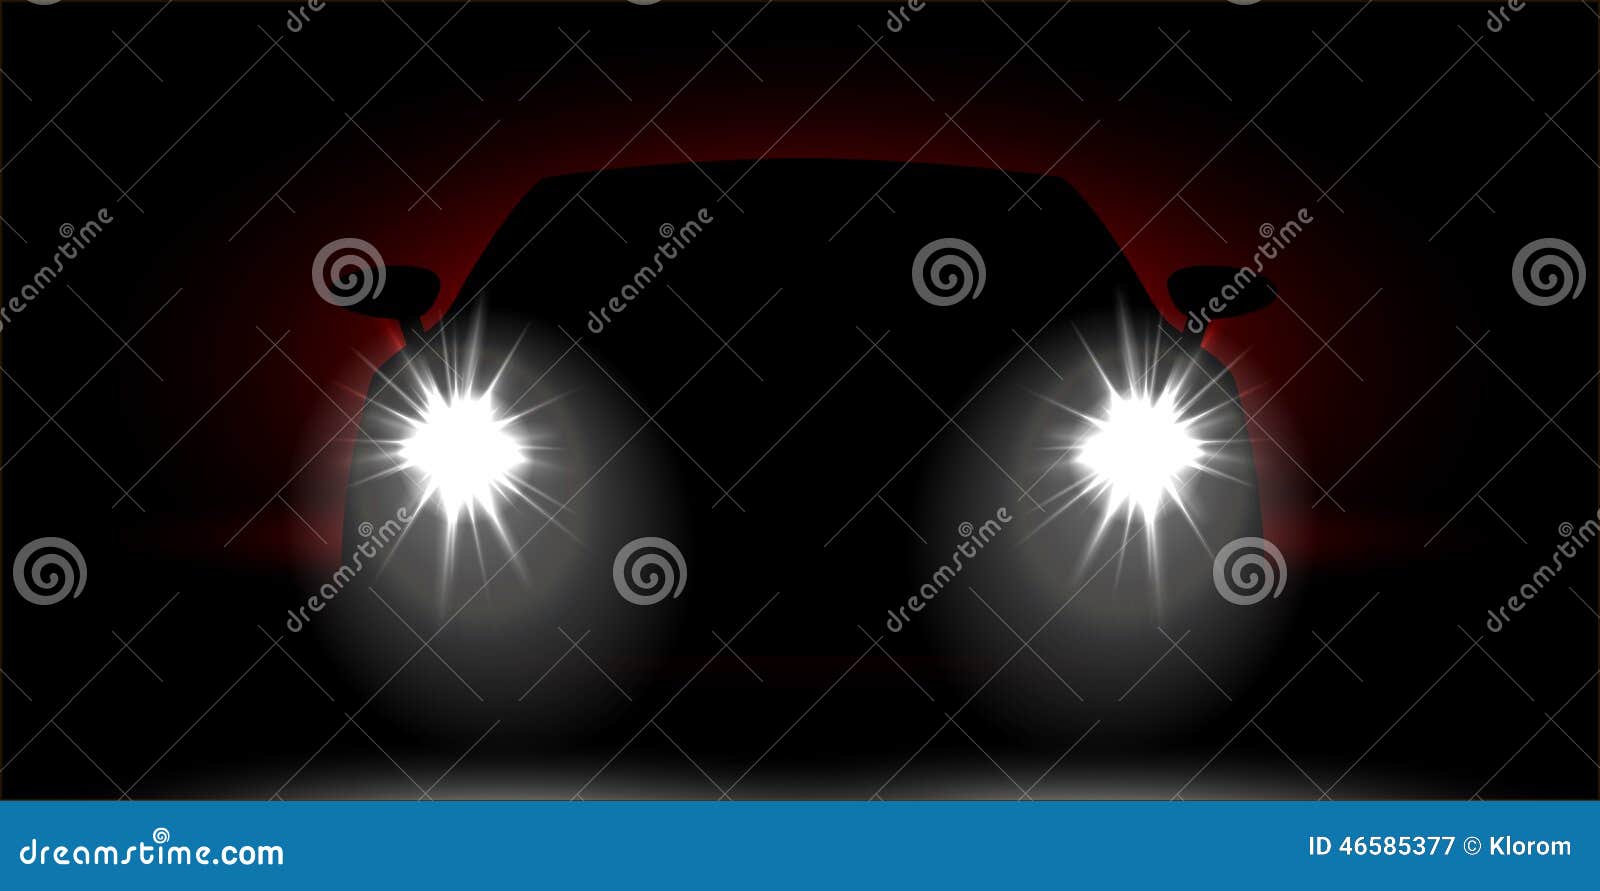 car headlights shining in the dark